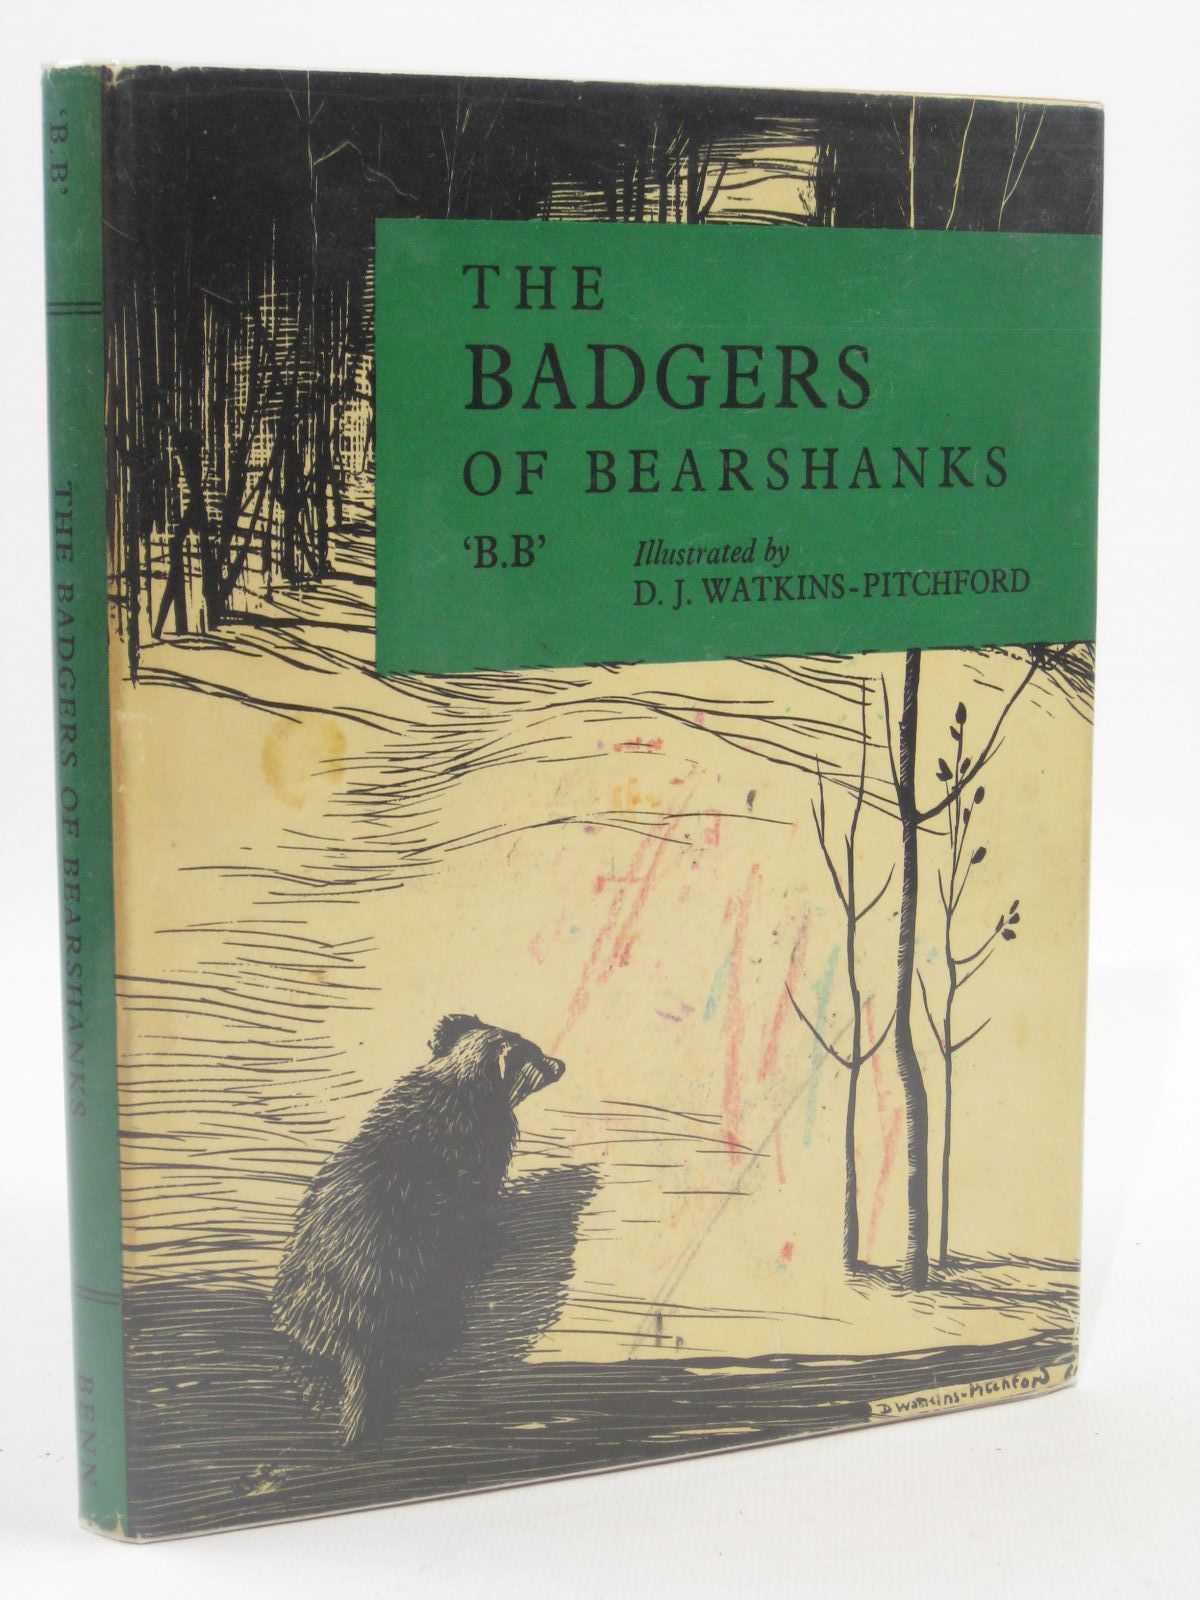 The Badgers Of Bearshanks